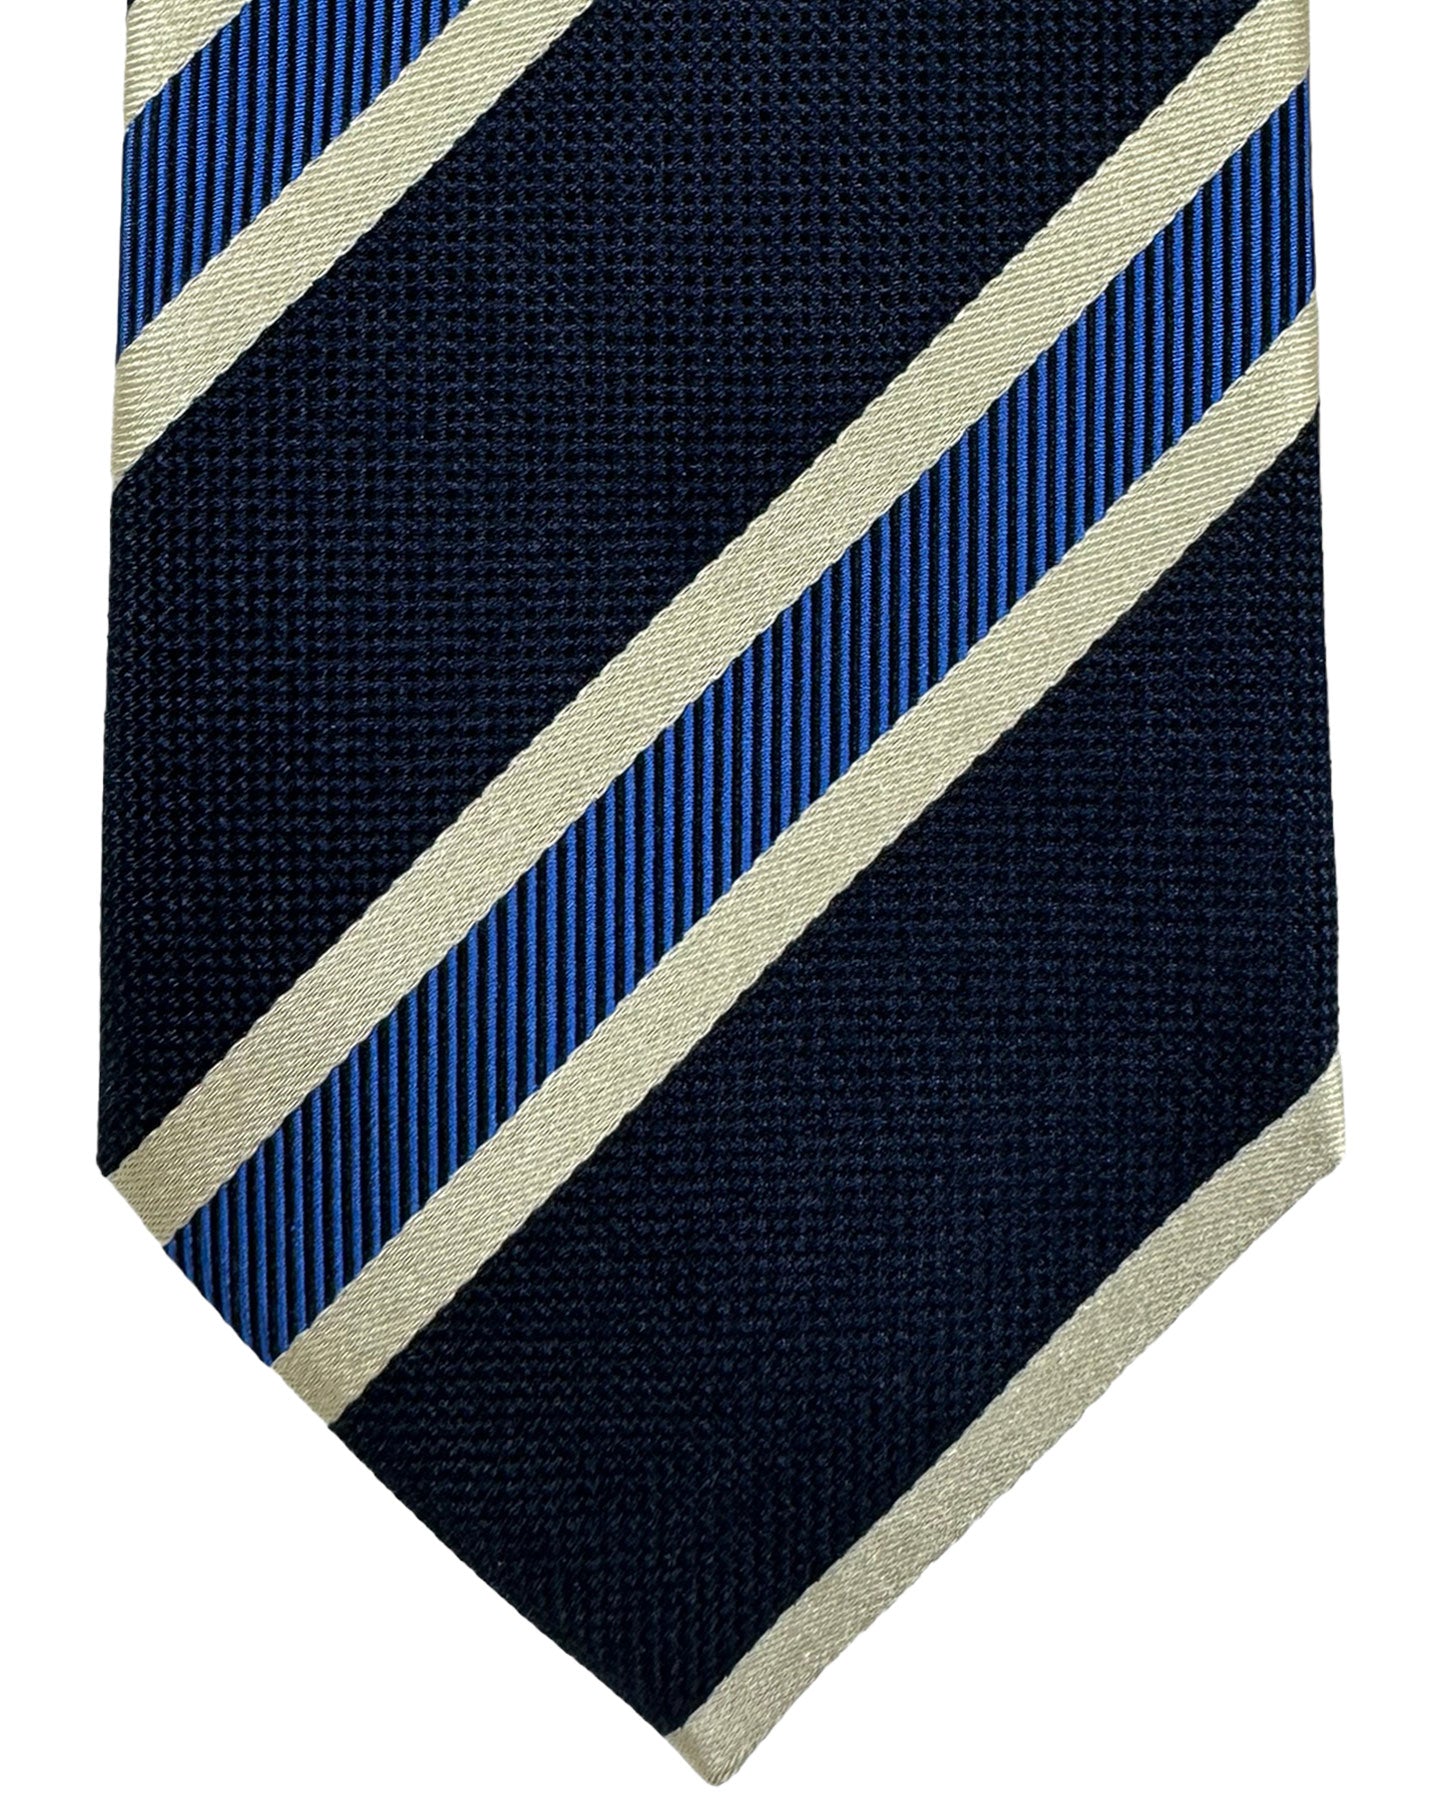 Canali Silk Tie Navy Royal Blue Silver Stripes Pattern